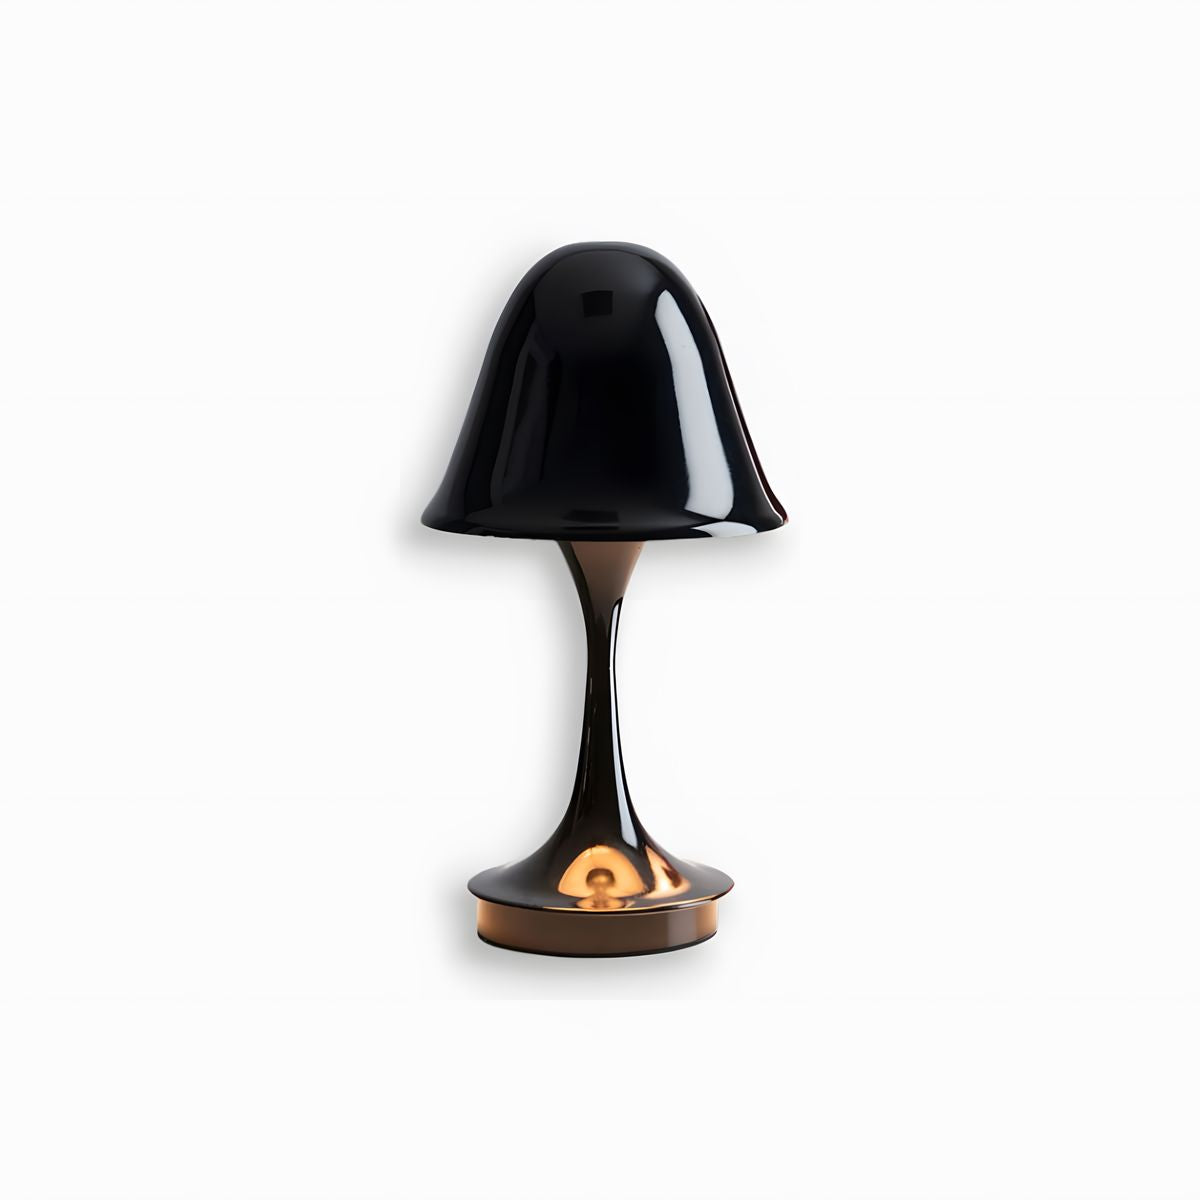 Mario Table Lamp - Vinlighting